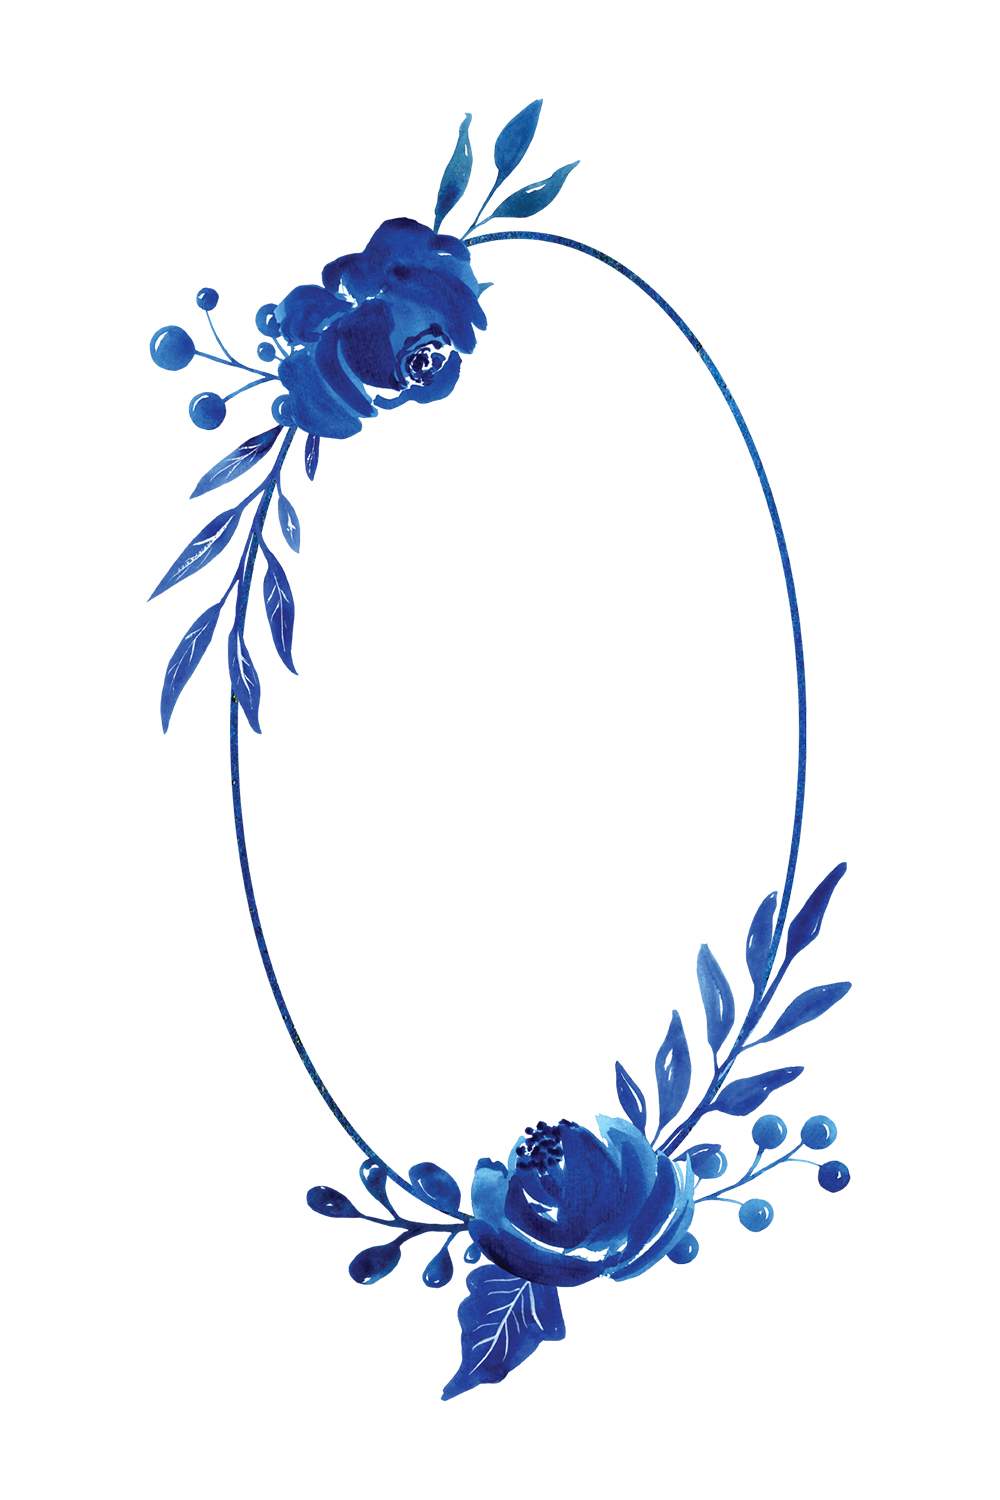 Indigo blue roses premade floral frames pinterest preview image.